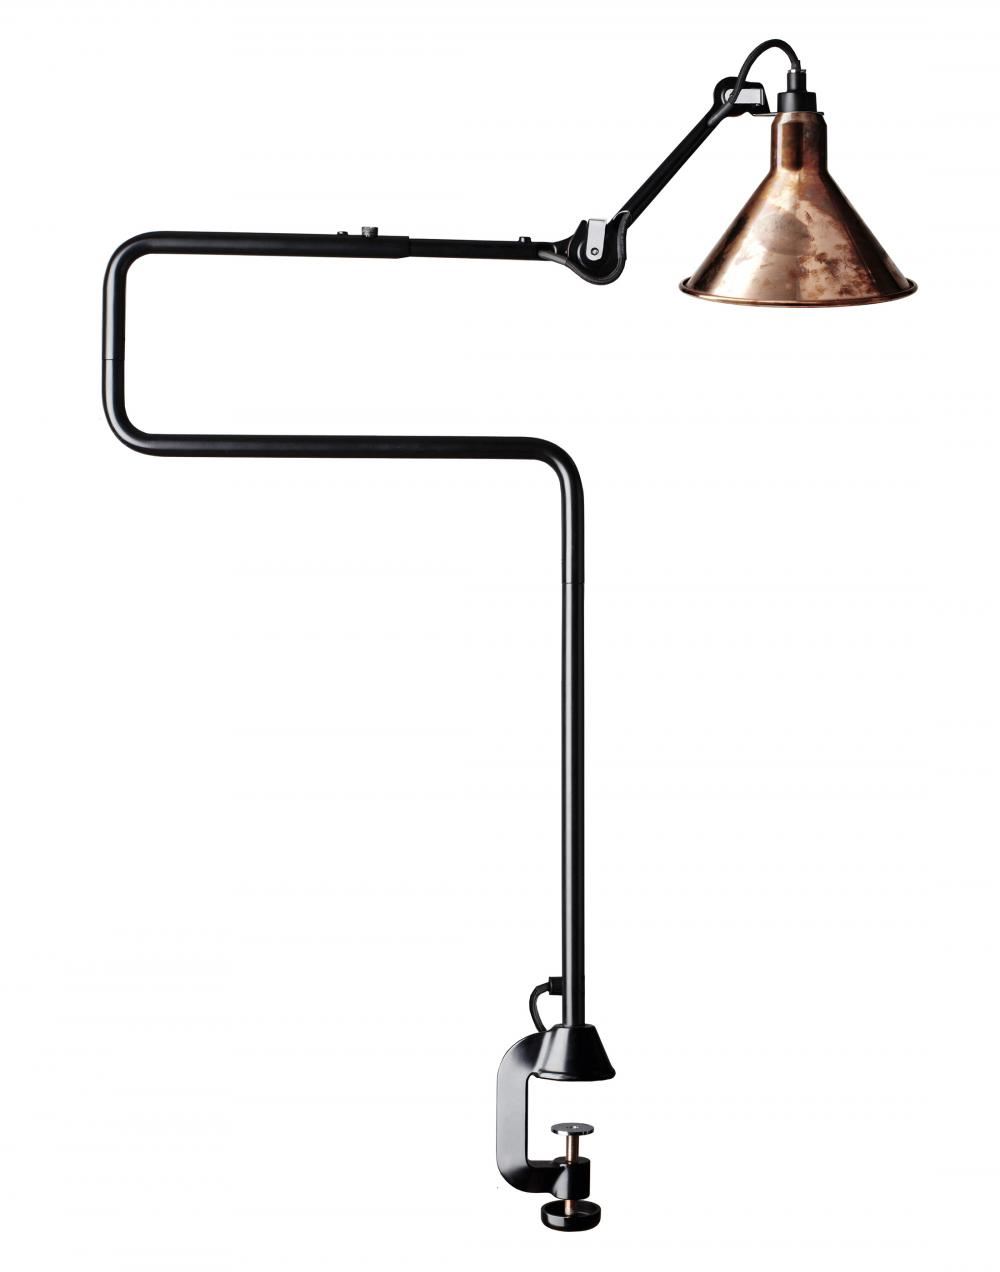 Lampe Gras 211311 Architect Lamp Raw Copper Shade With White Interior Conic